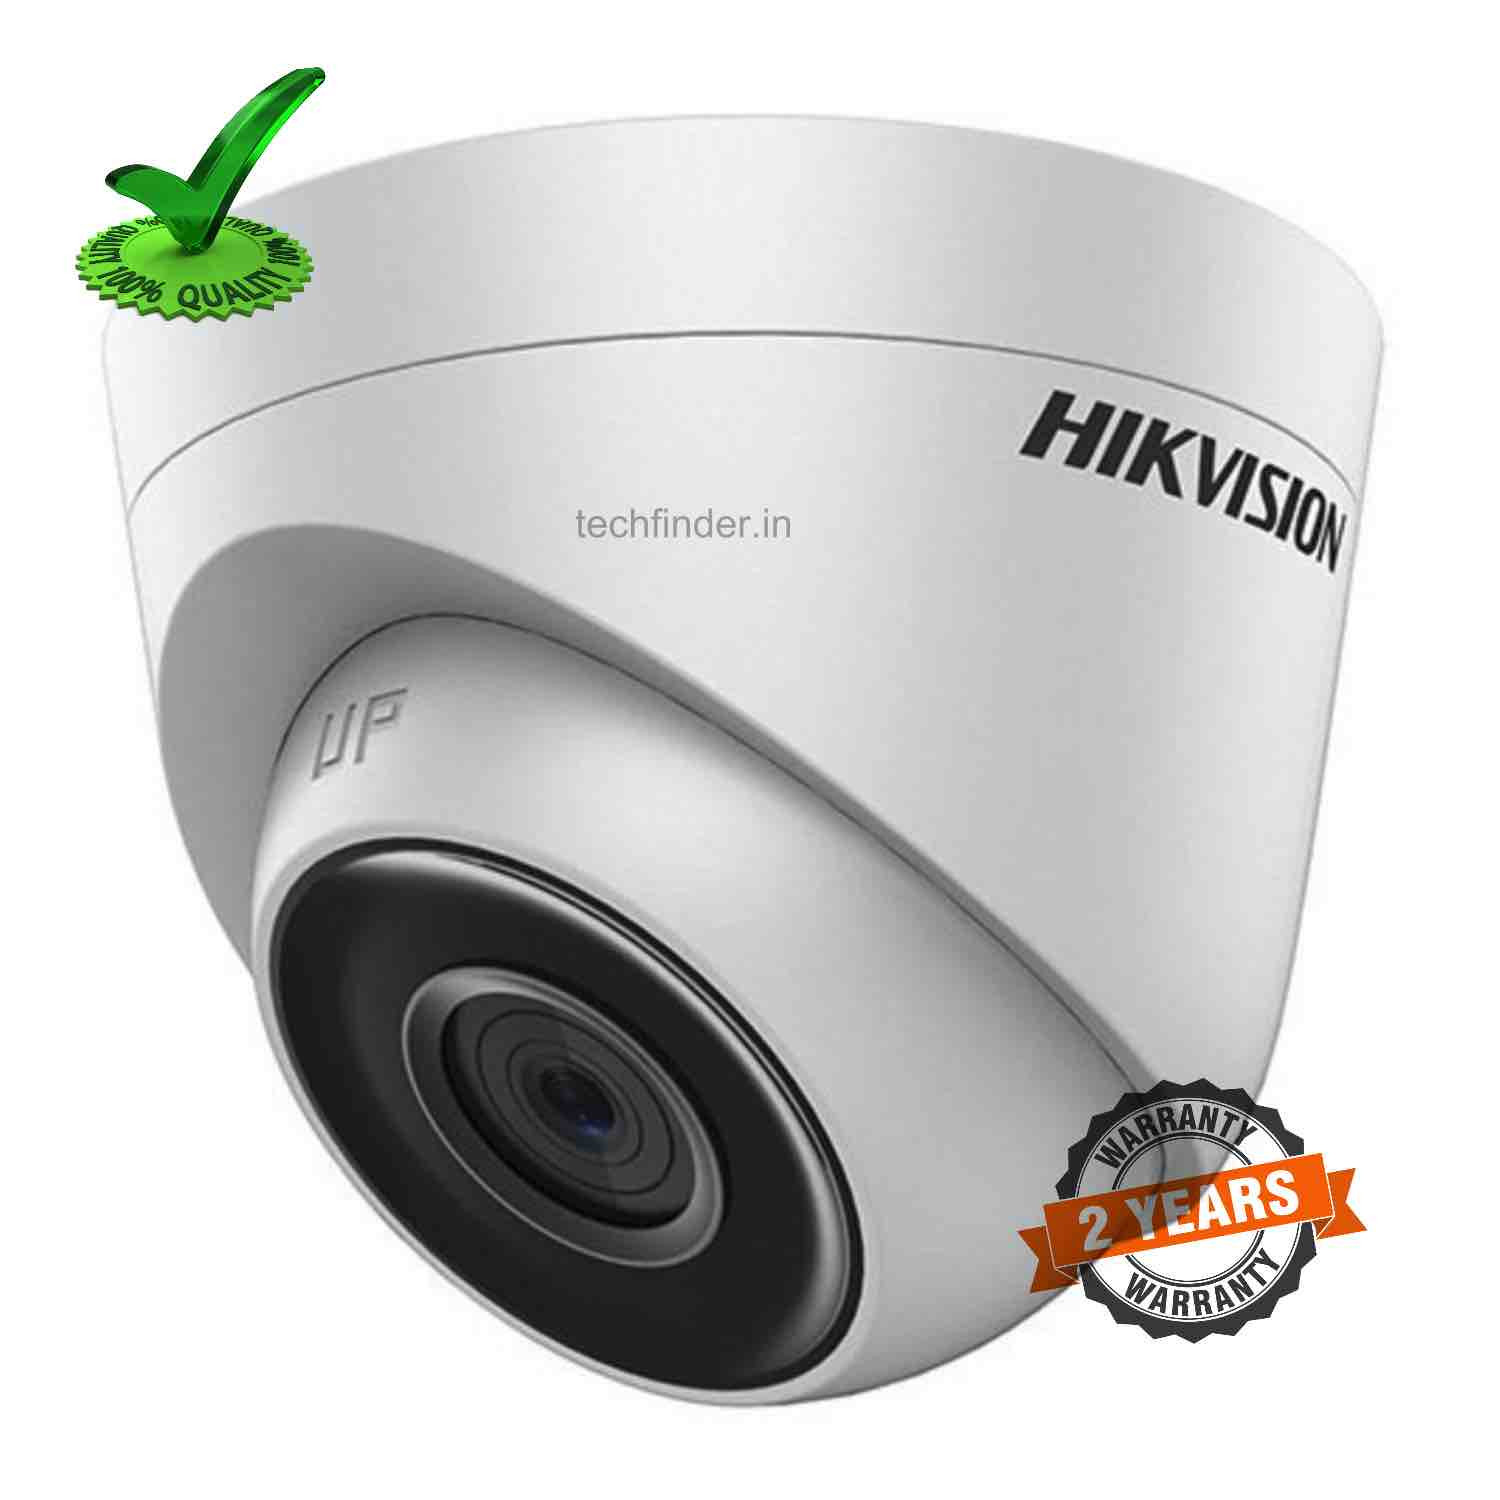 Hikvision DS-2CD1323G0-IU 2mp Ip Ir Smart Dome Camera